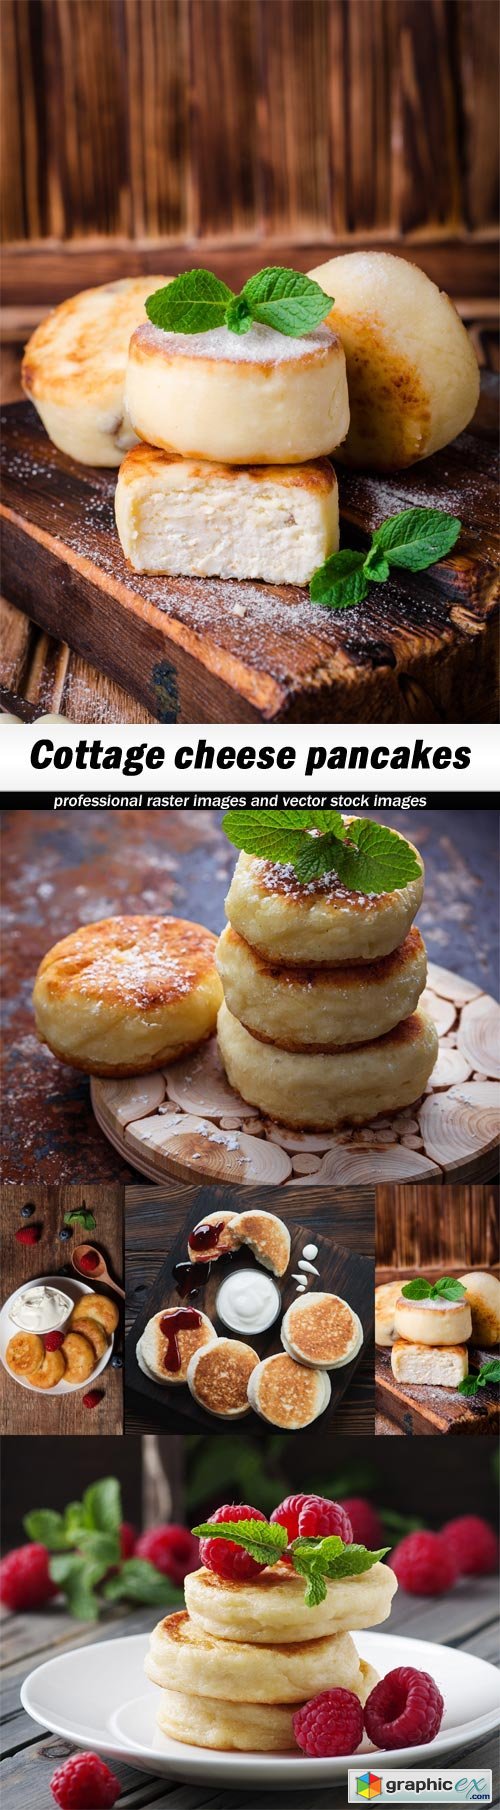 Cottage cheese pancakes - 5 UHQ JPEG